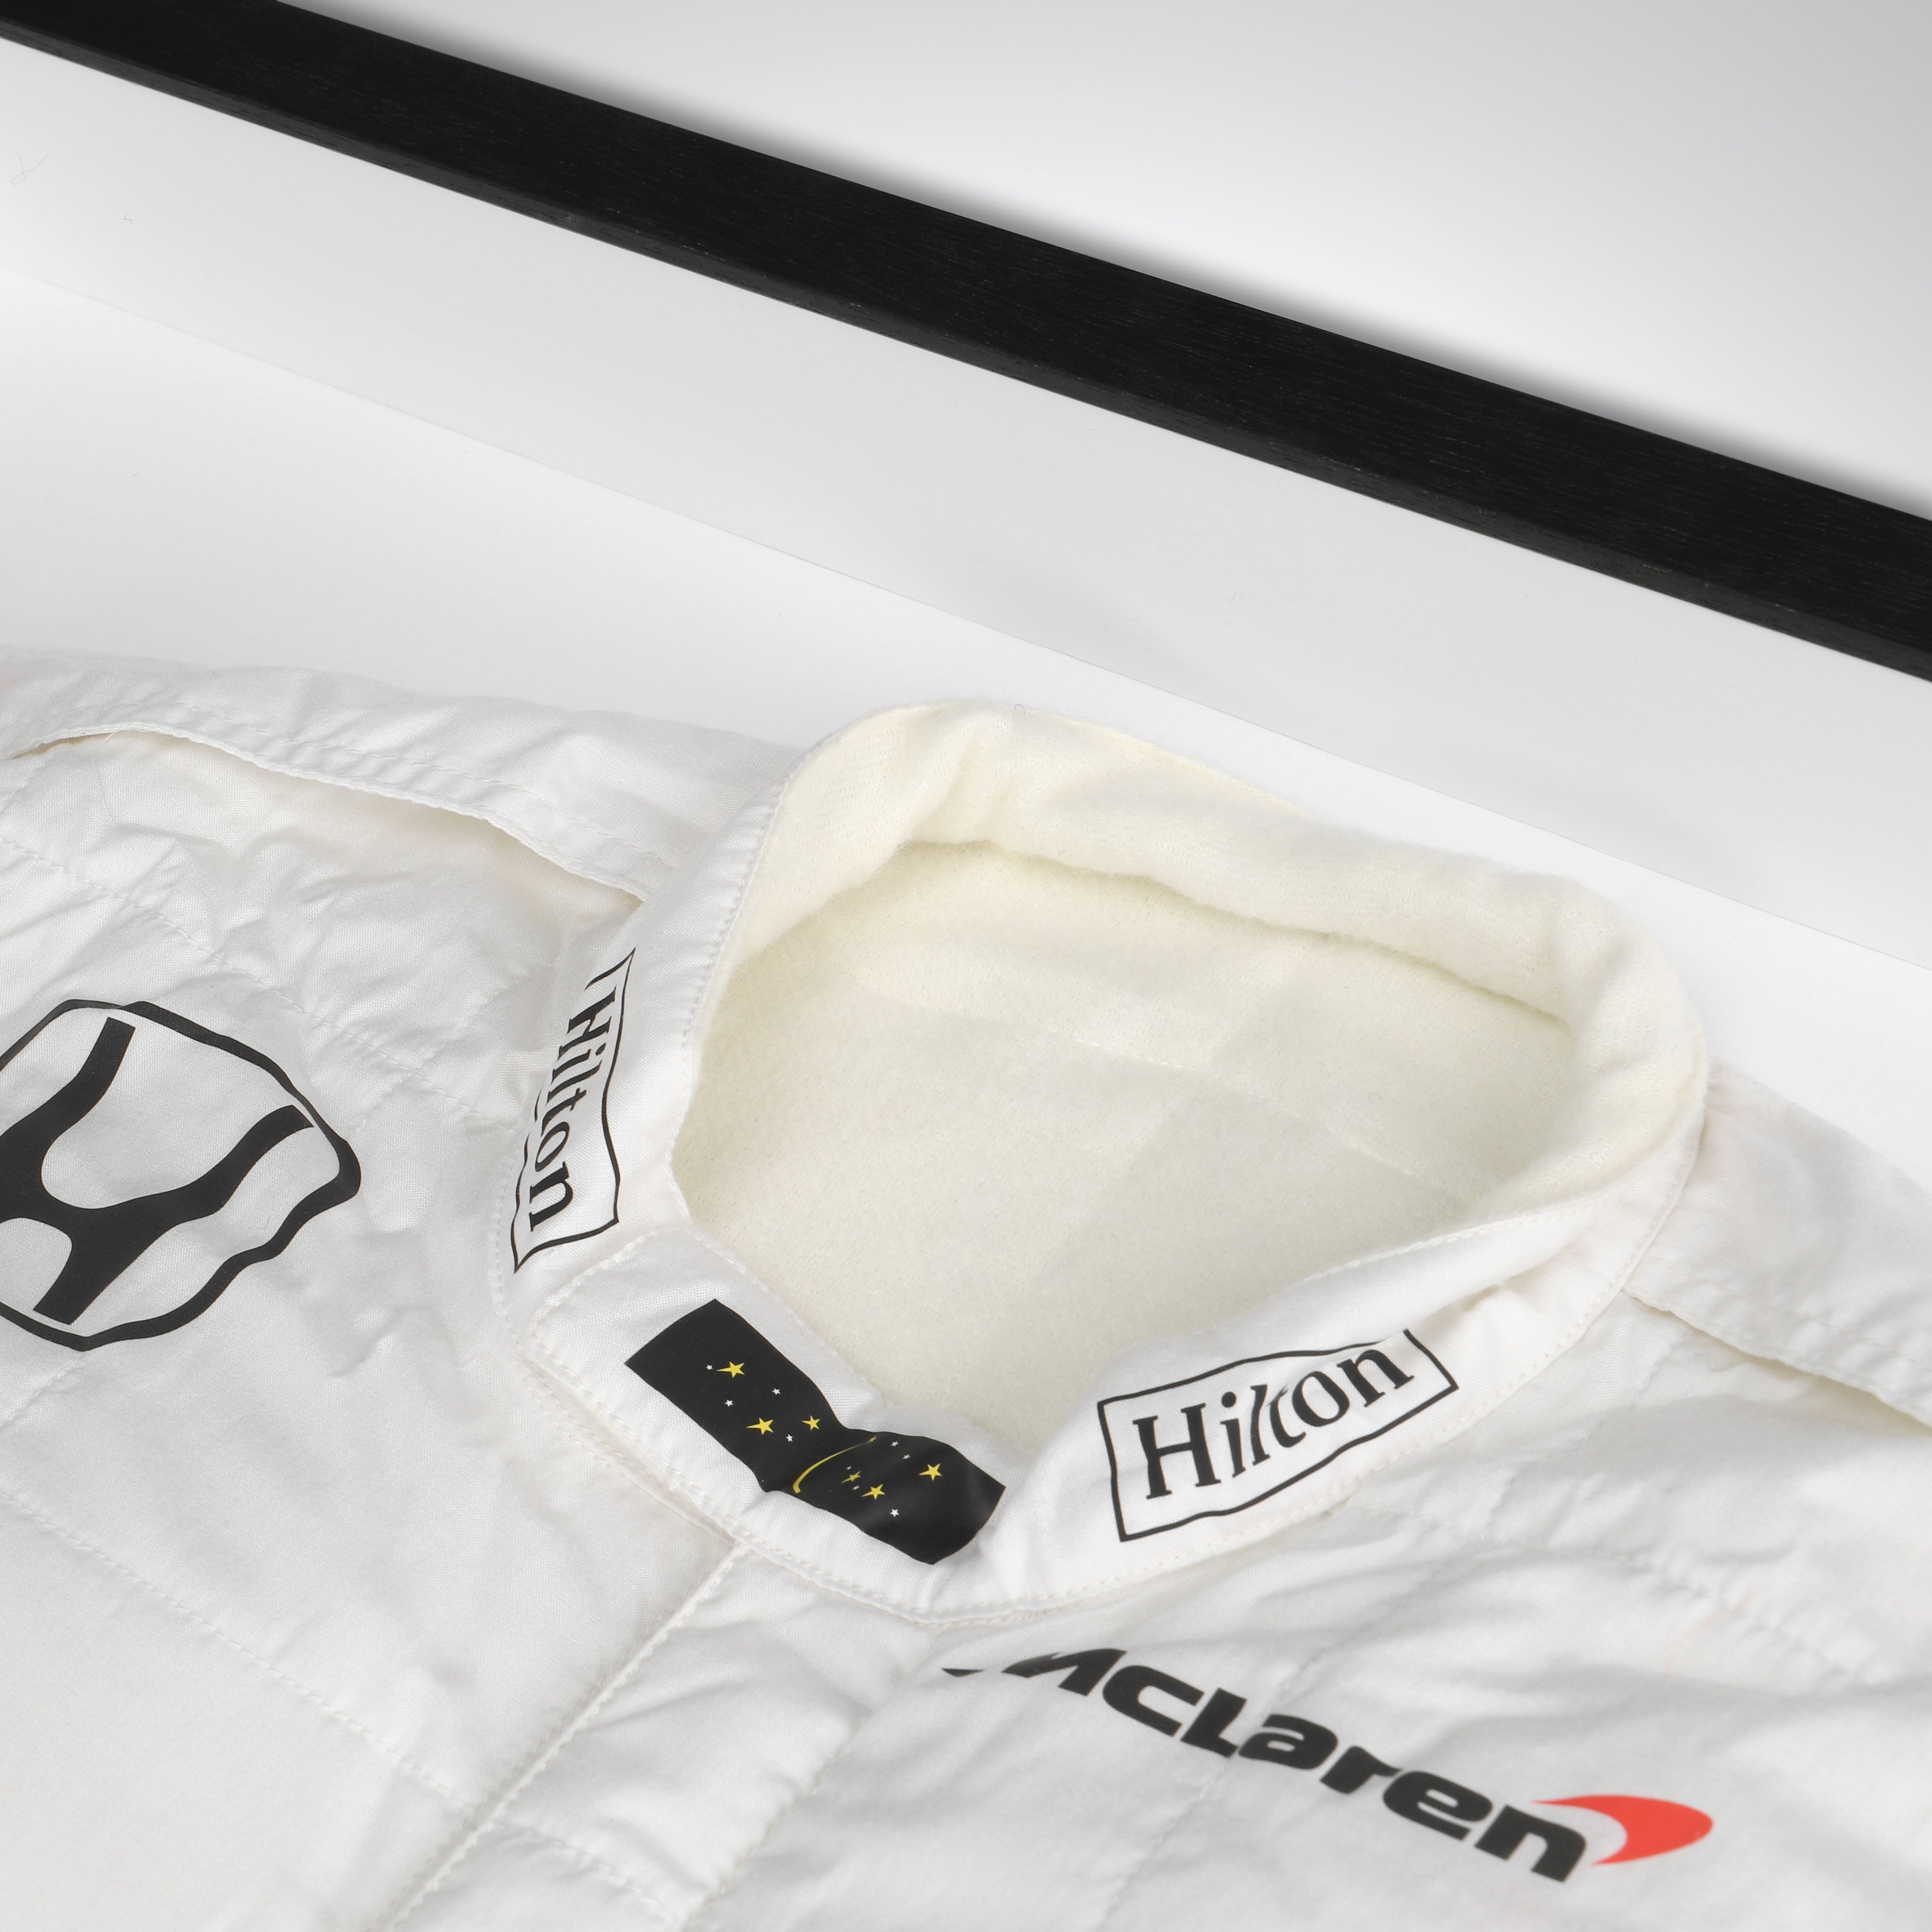 Fernando Alonso 2017 Replica McLaren F1 Team Race Suit with Chandon Star Branding